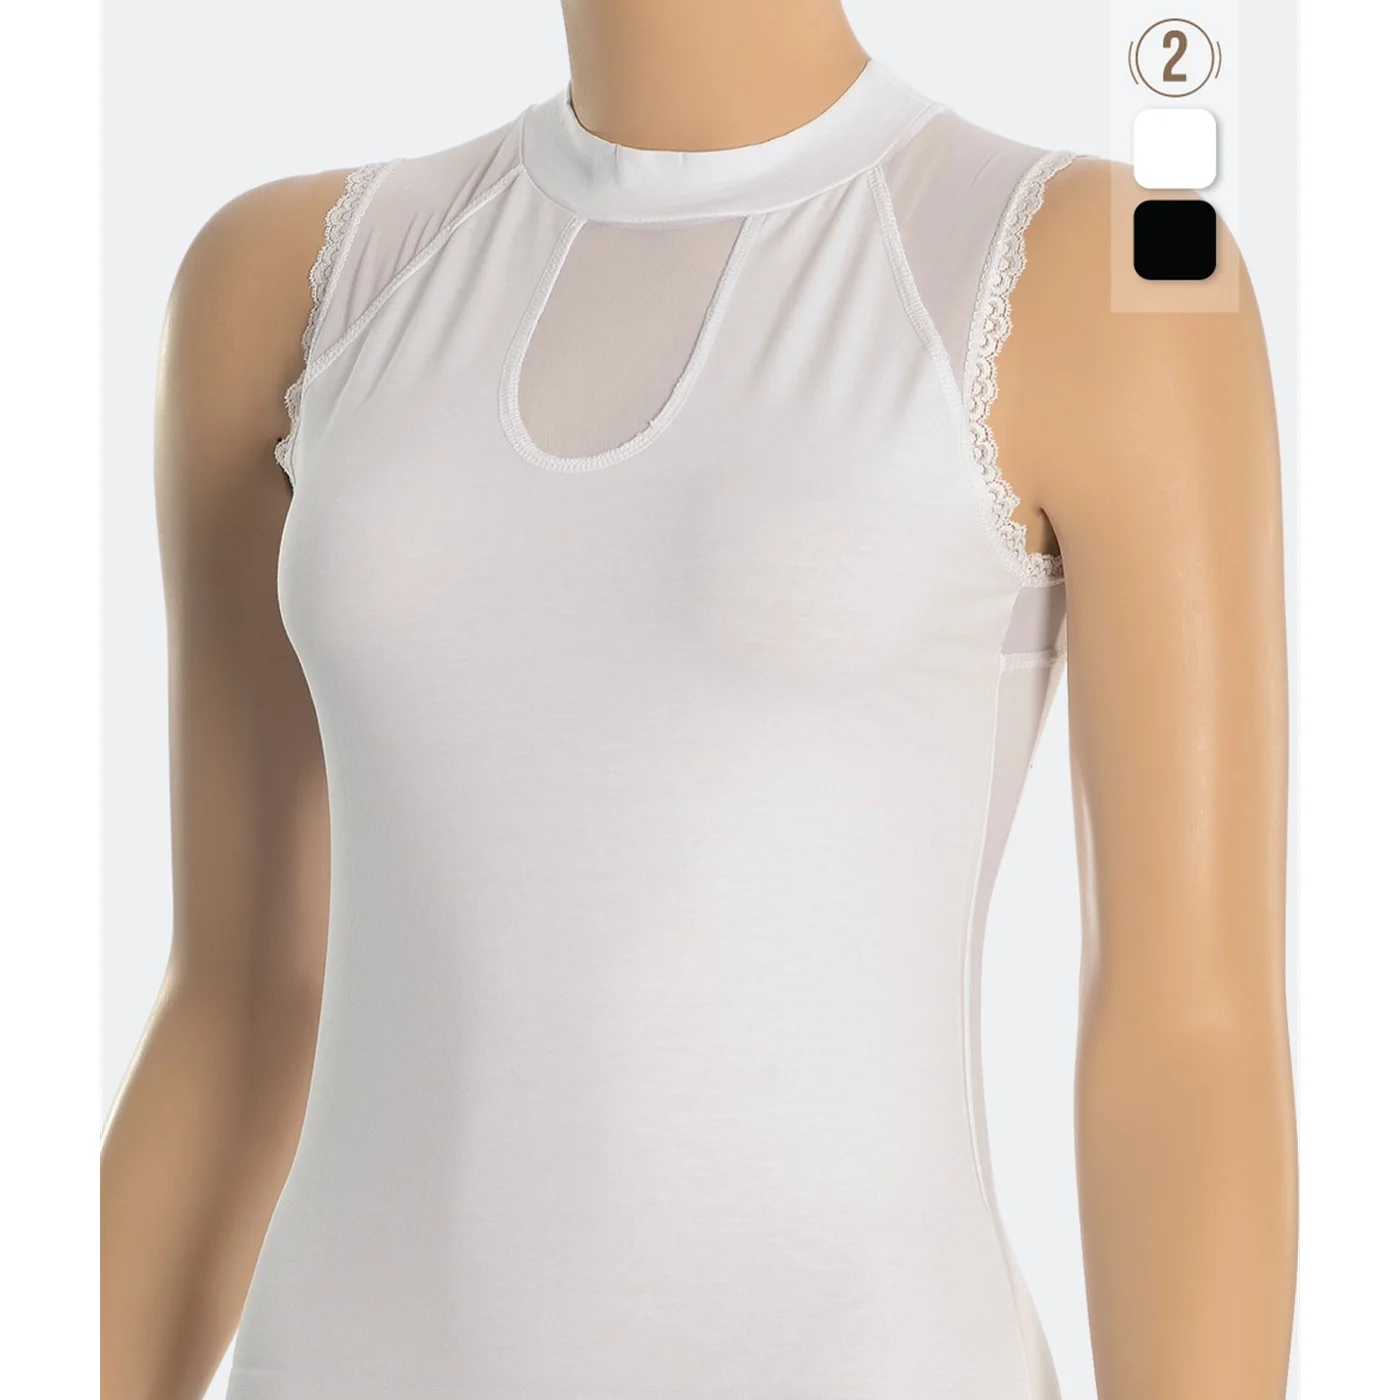 6 pcs Women's Half High Collar Tank Tops 96% Cotton 4% Spandex Elegant Undershirt Sleeveless Sexy Camisole Lady Singlet y2k